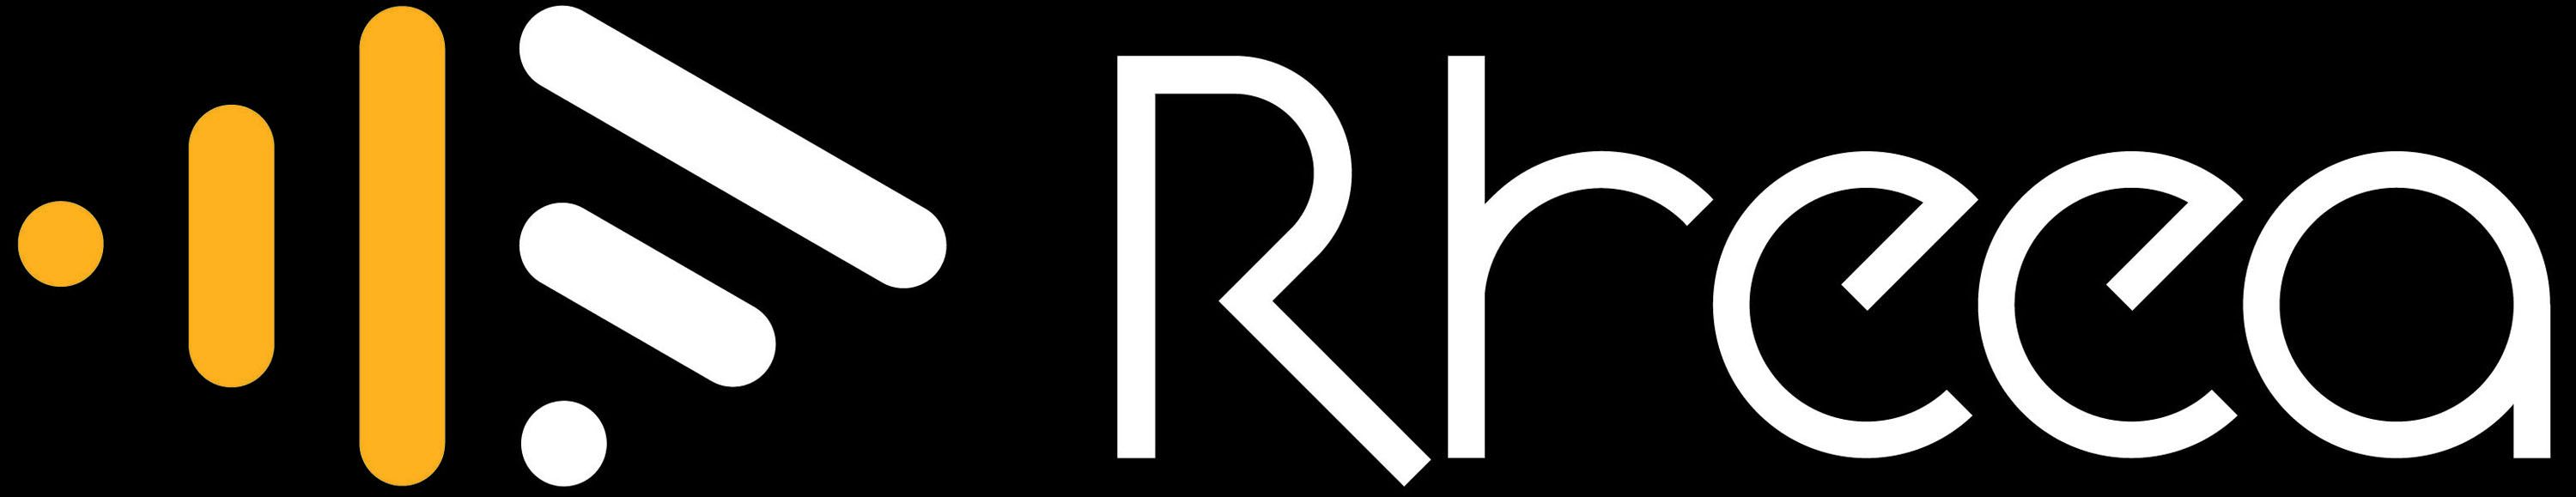 rheeatech Logo